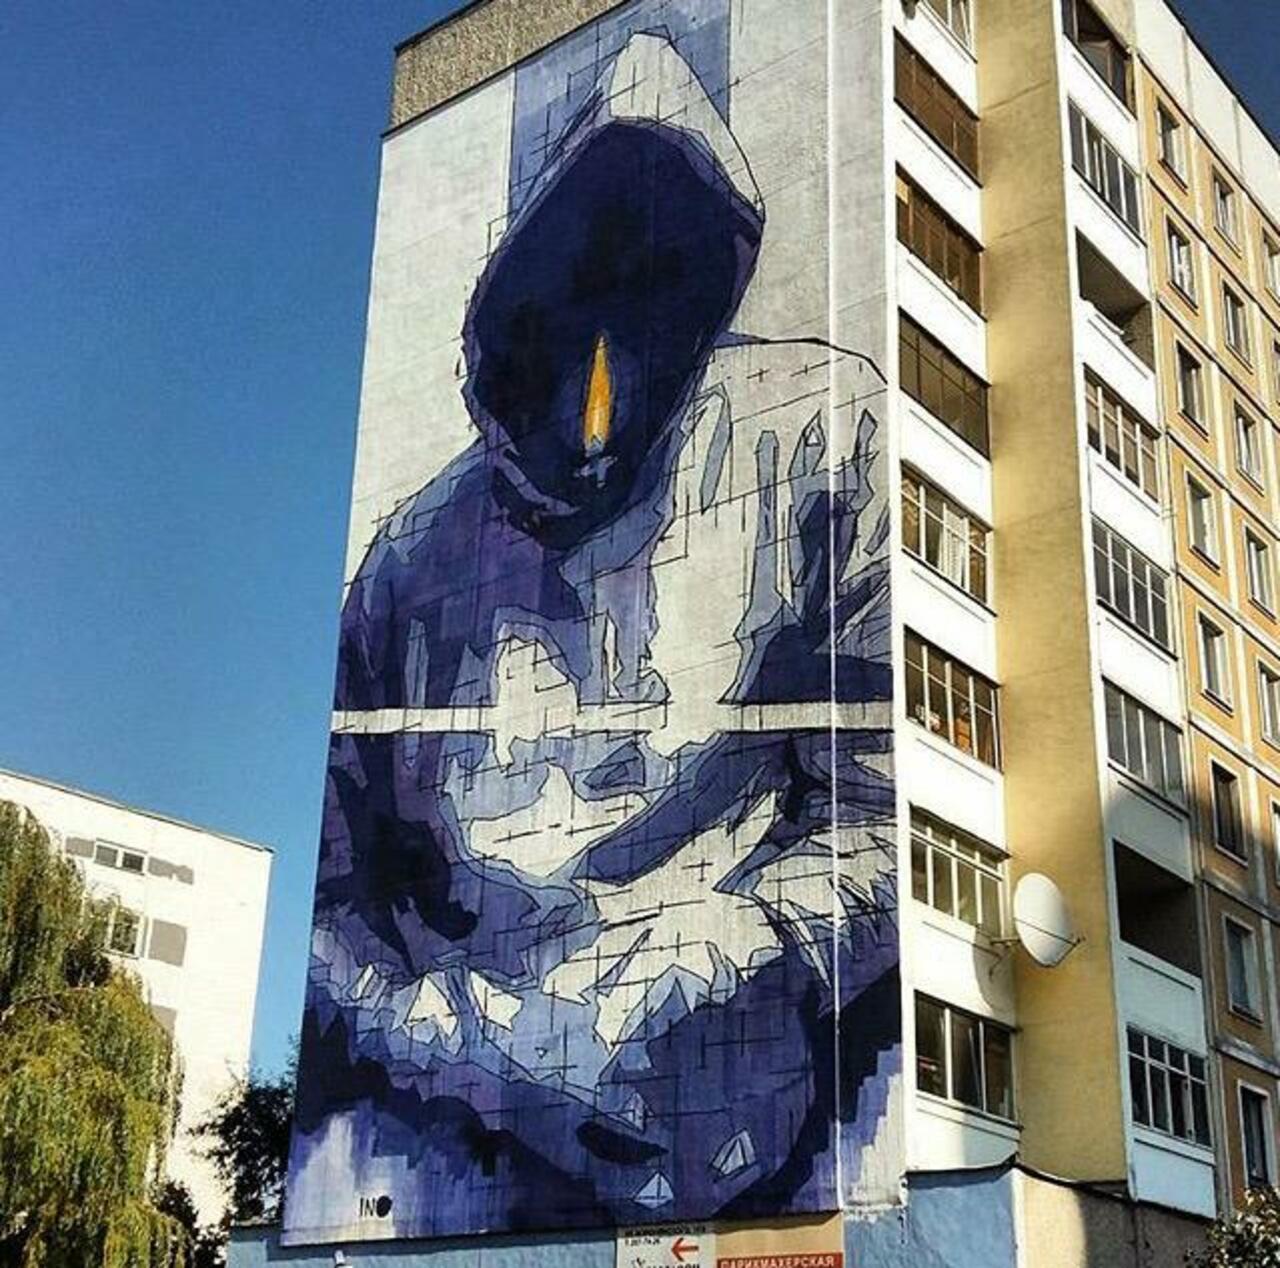 RT @mzajaeh: 'Man With No Name' 
New Street Art by iNO in Minsk, Belarus 

#art #graffiti #mural #streetart http://t.co/kh7QS6WUfQ